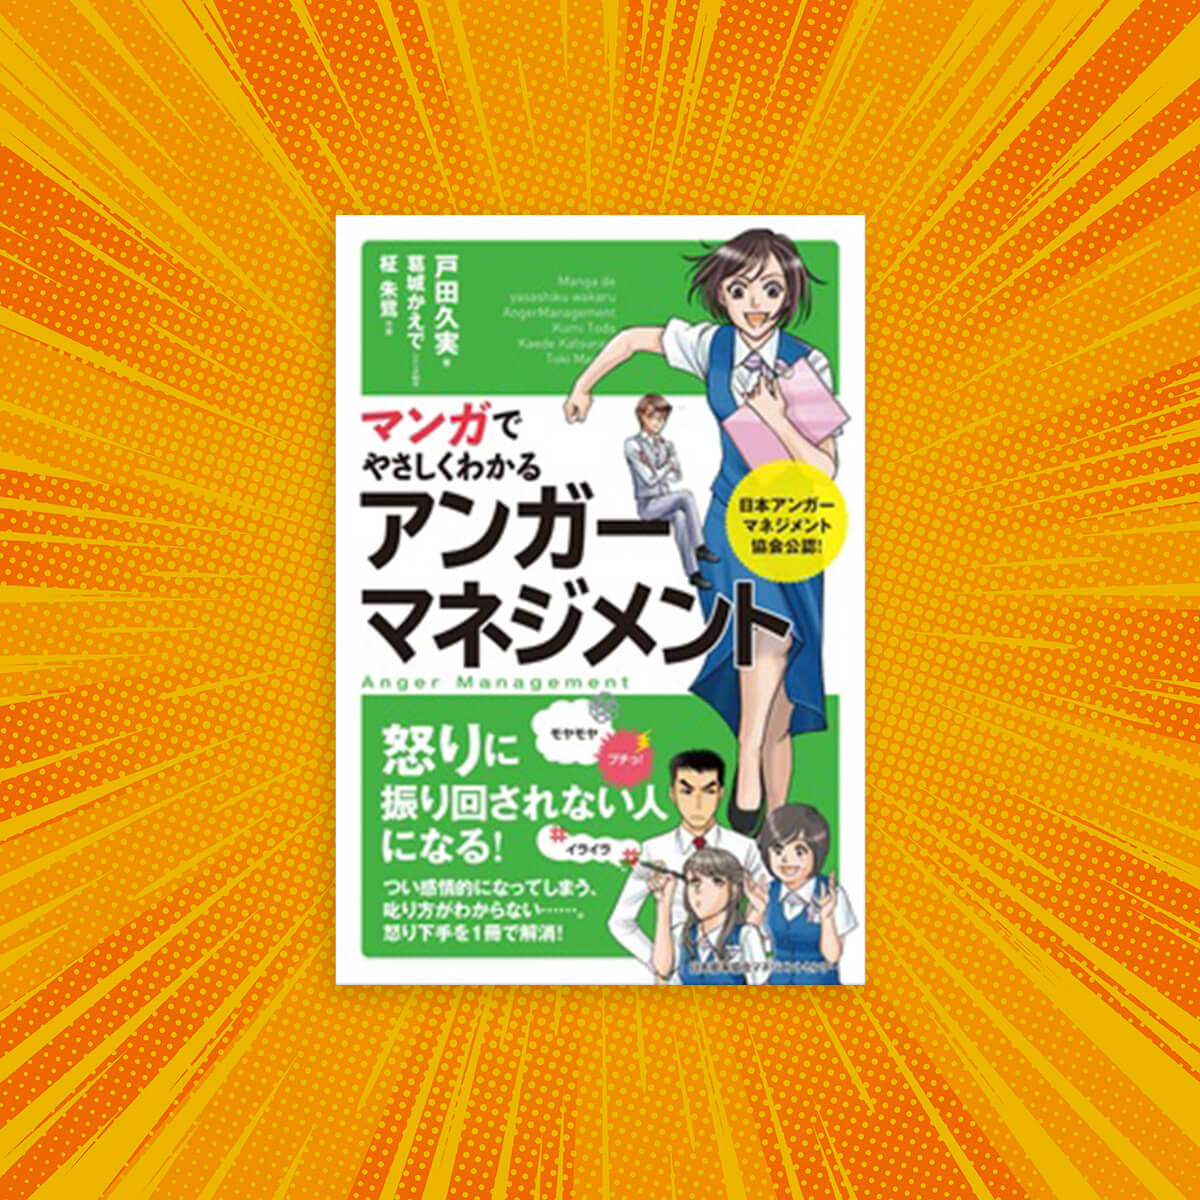 Easy reading through Manga | Anger management